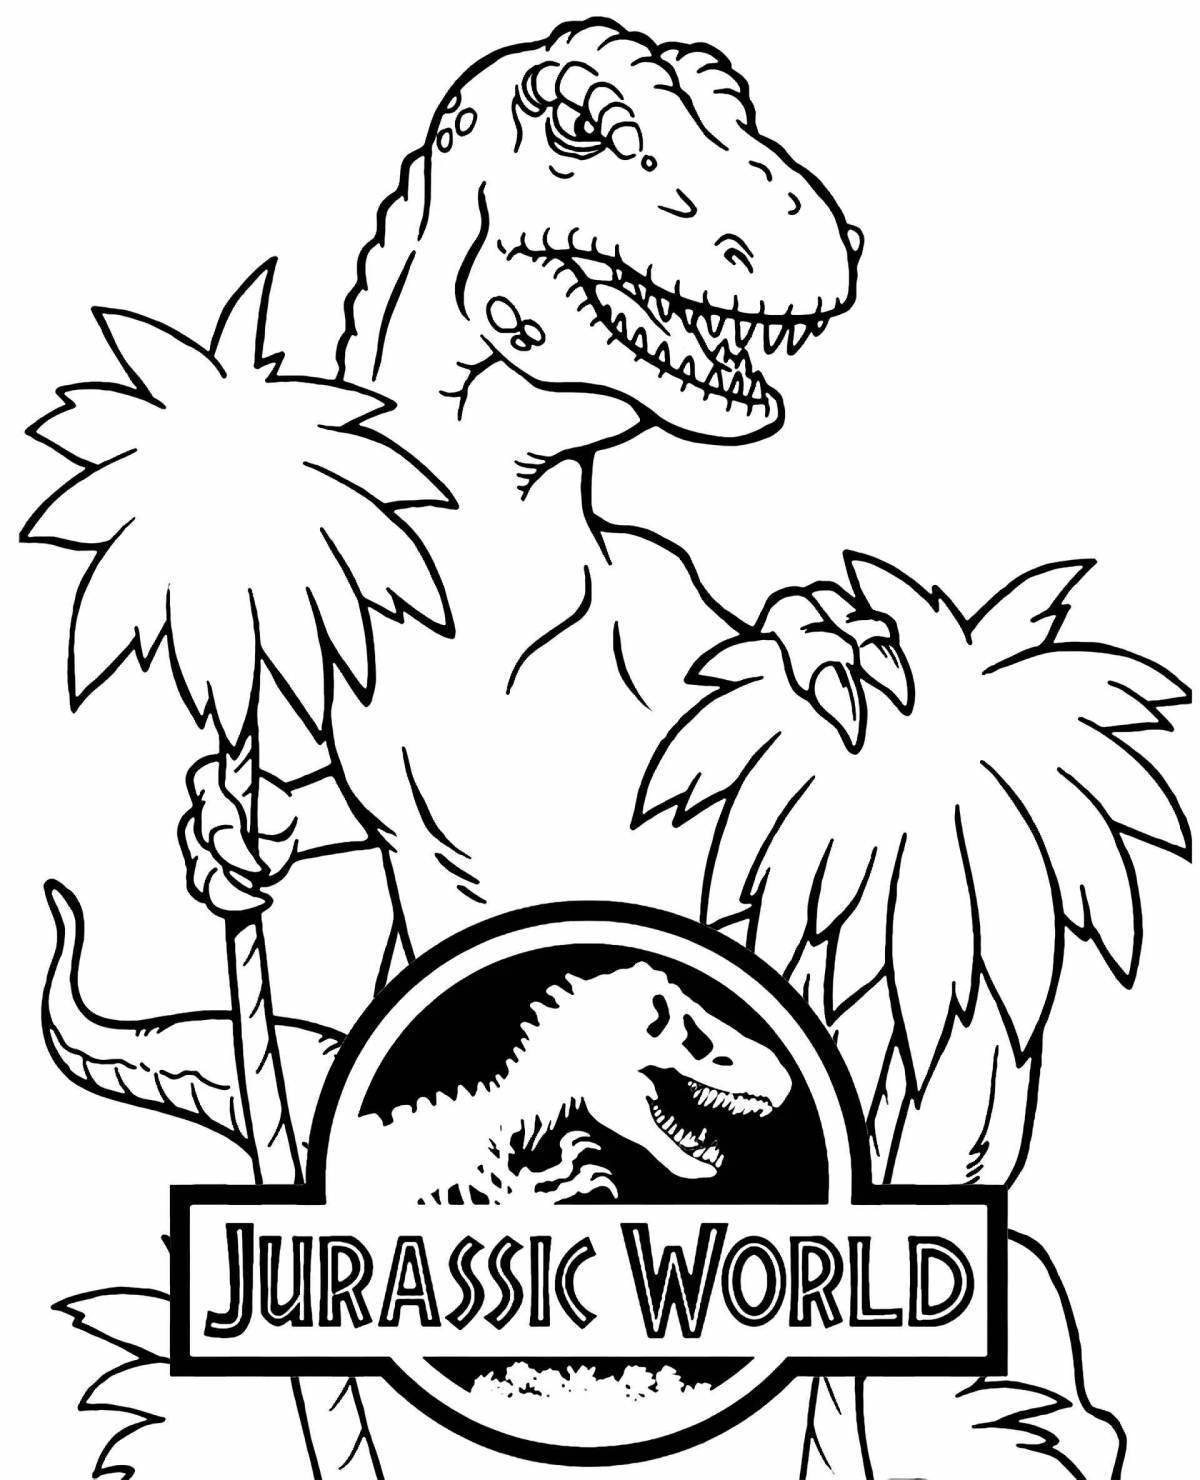 Vibrant Jurassic Park coloring book